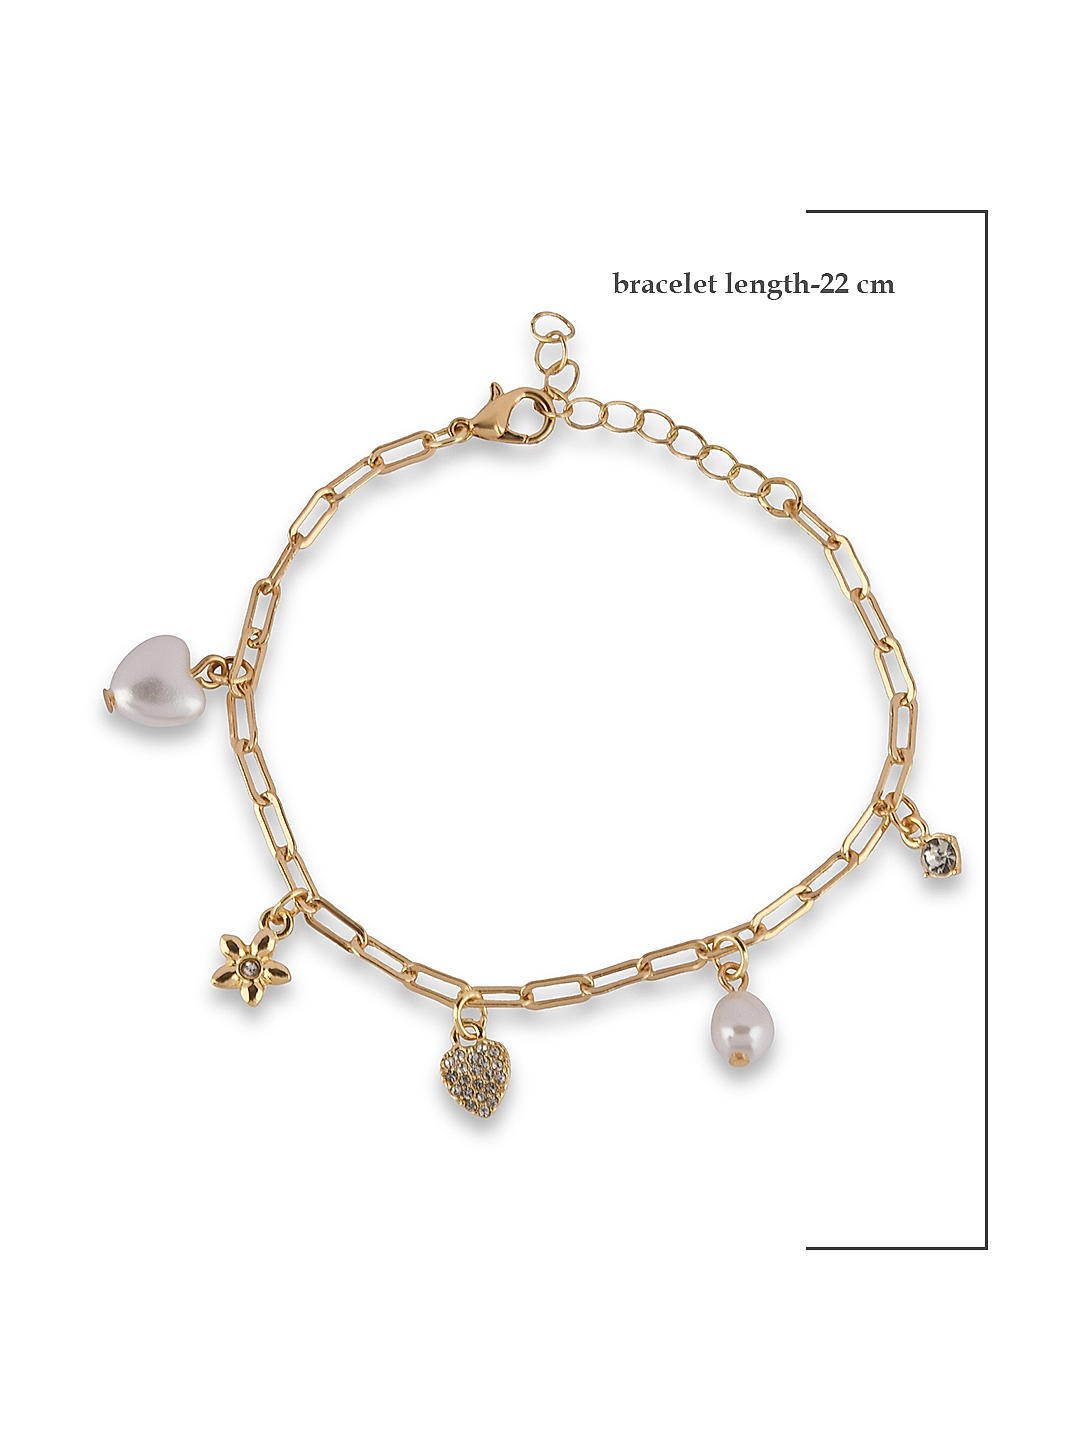 Sterling Silver Heart Tag Charm Bracelet | Tiffany & Co.